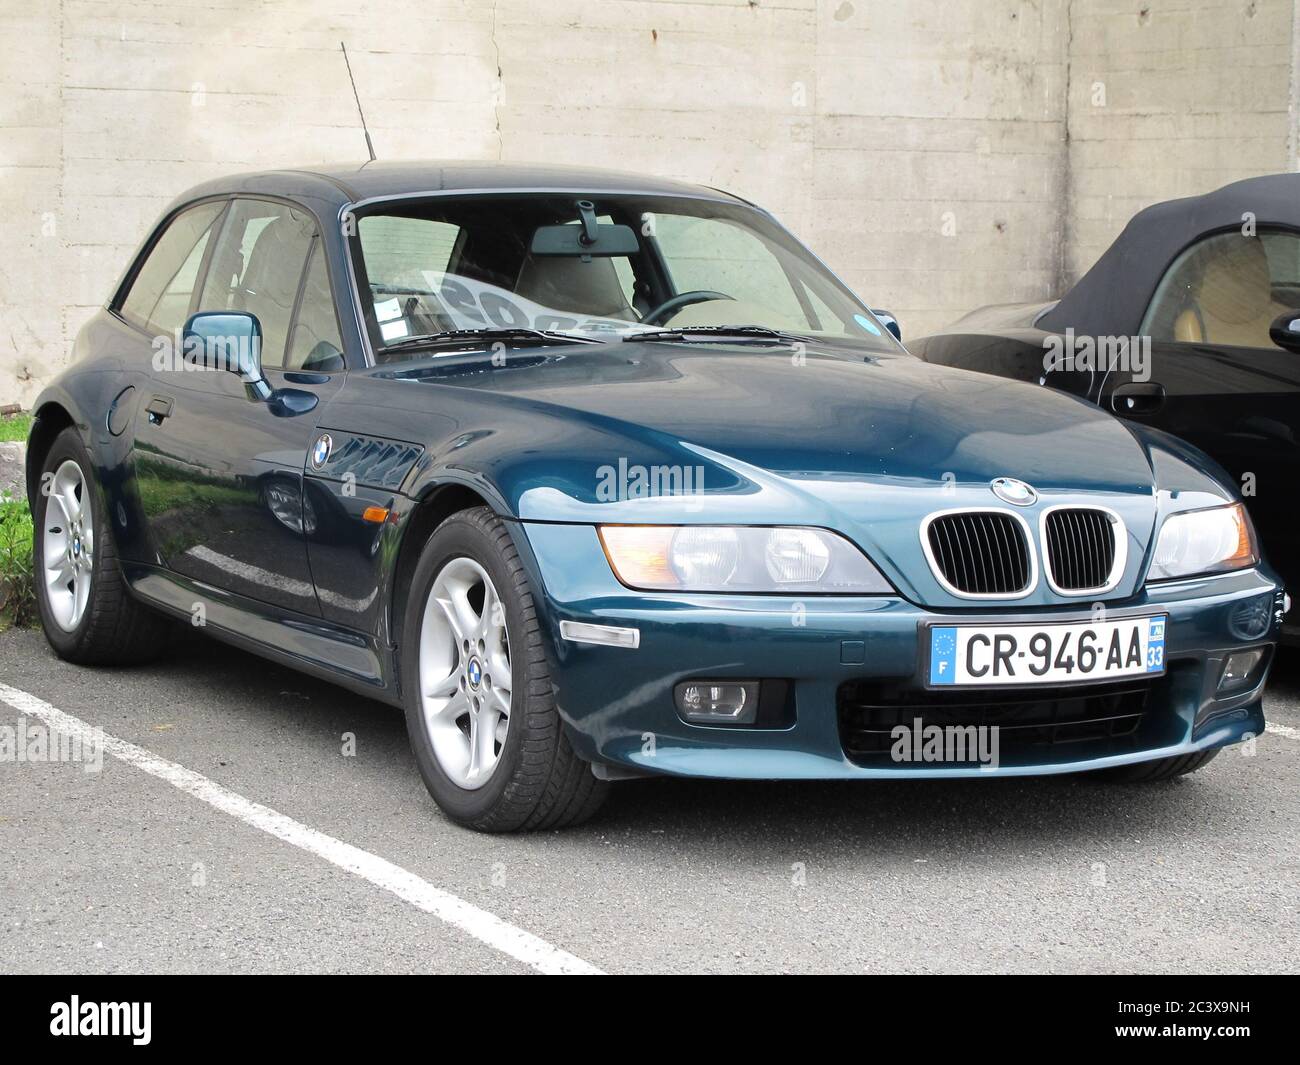 Bordeaux , Aquitaine / France - 06 14 2020 : BMW Z3 shooting brake coupe sports car Stock Photo